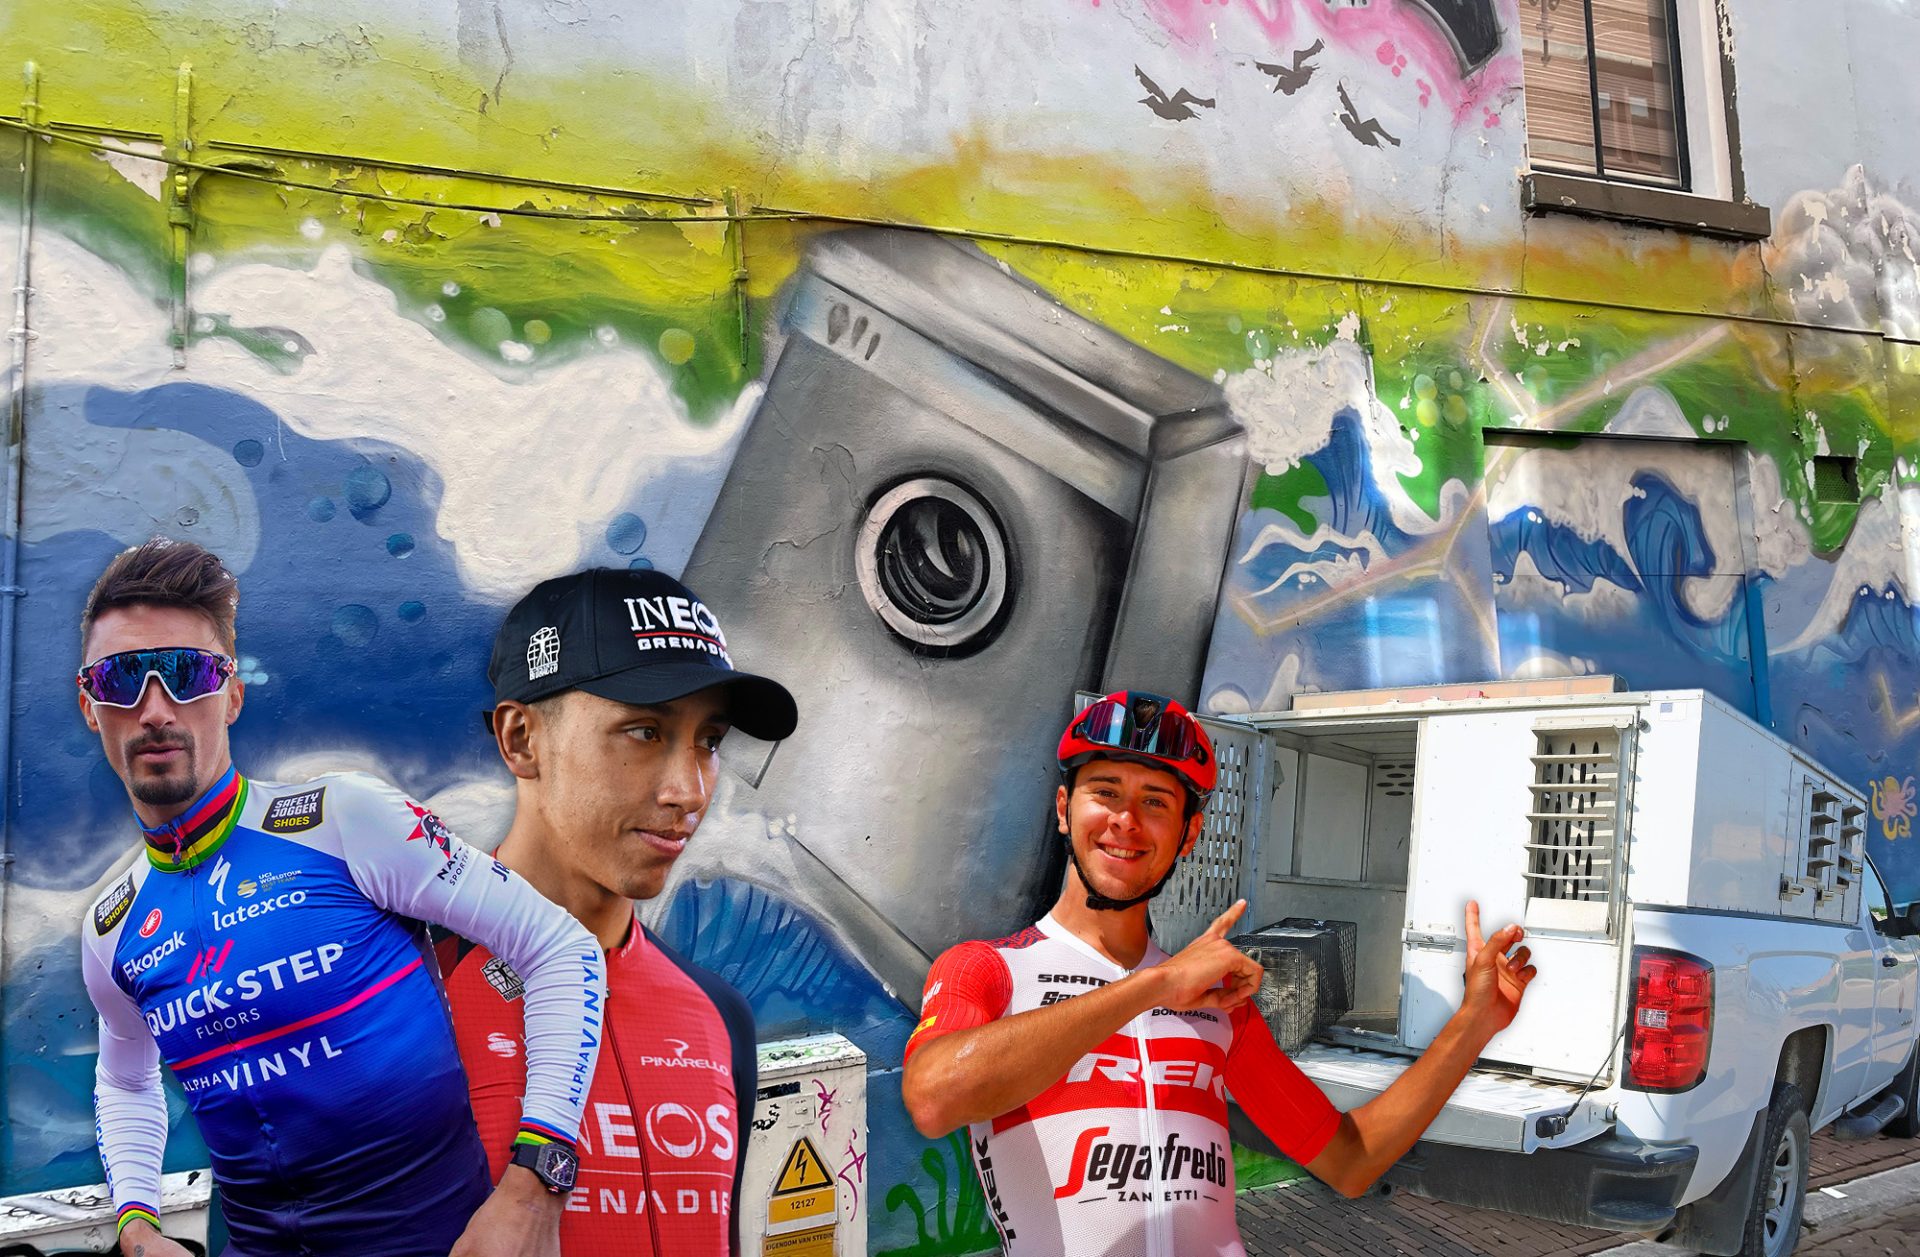 Julian Alaphilippe, Egan Bernal and Antonio Tiberi in front of washing machine graffiti.